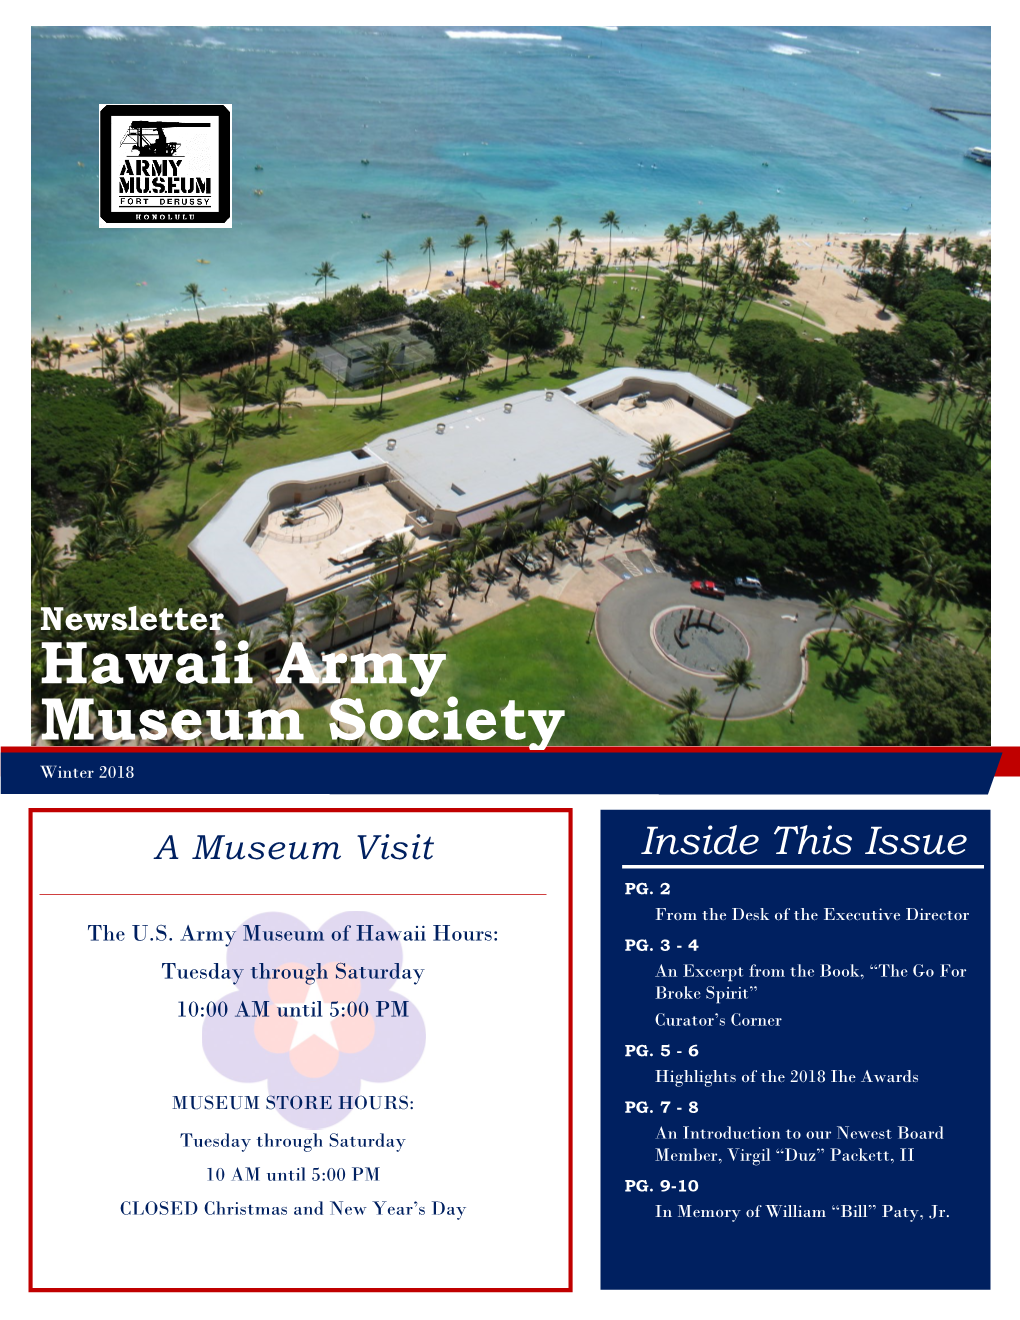 Hawaii Army Museum Society Winter 2018